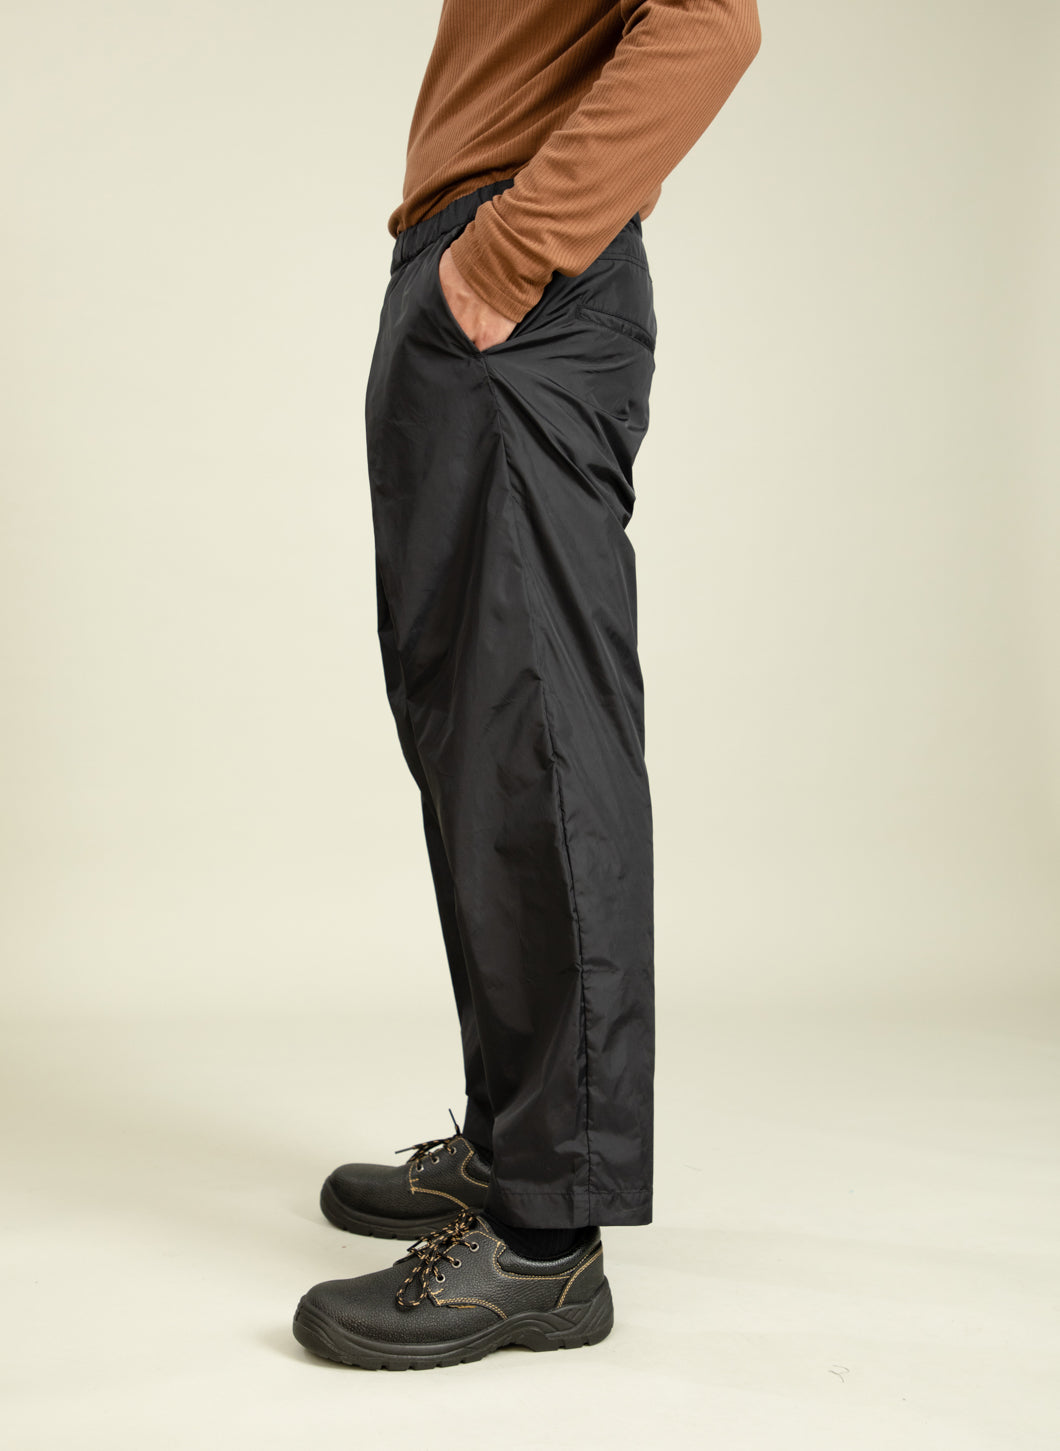 Elastic Waist Pants with Deep Pleats in Black Nylon